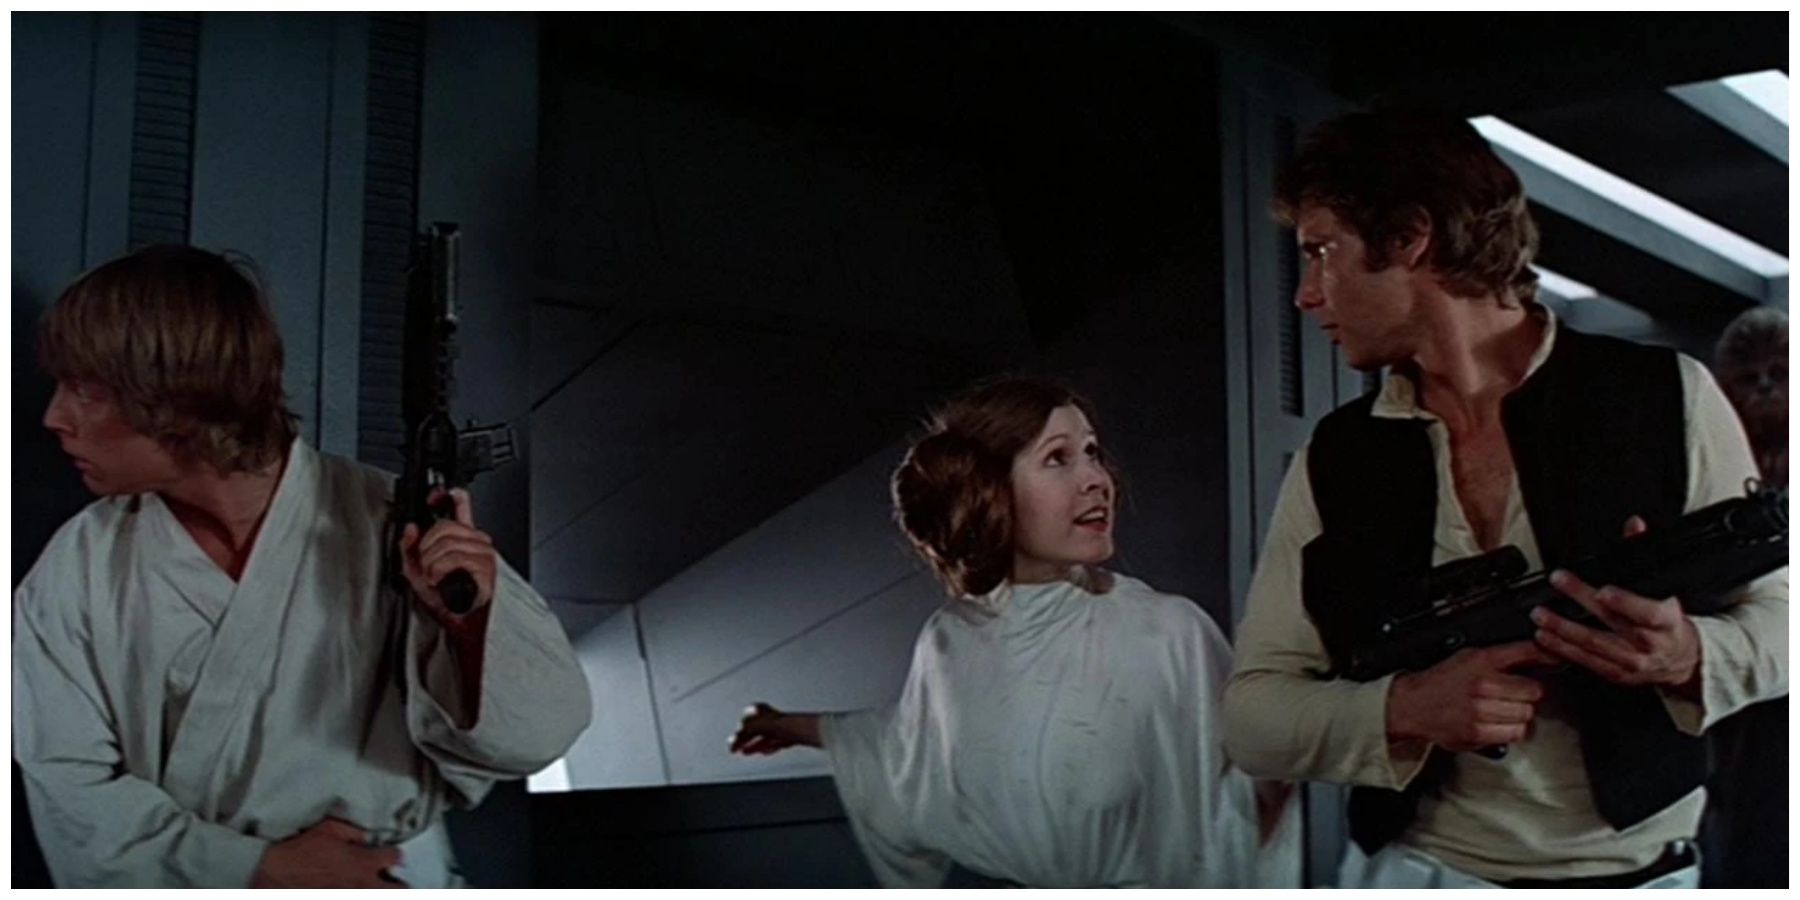 Mark Hamill as Luke Skywalker. Carrie Fisher as Leia Organa. Harrison Ford as Han Solo.